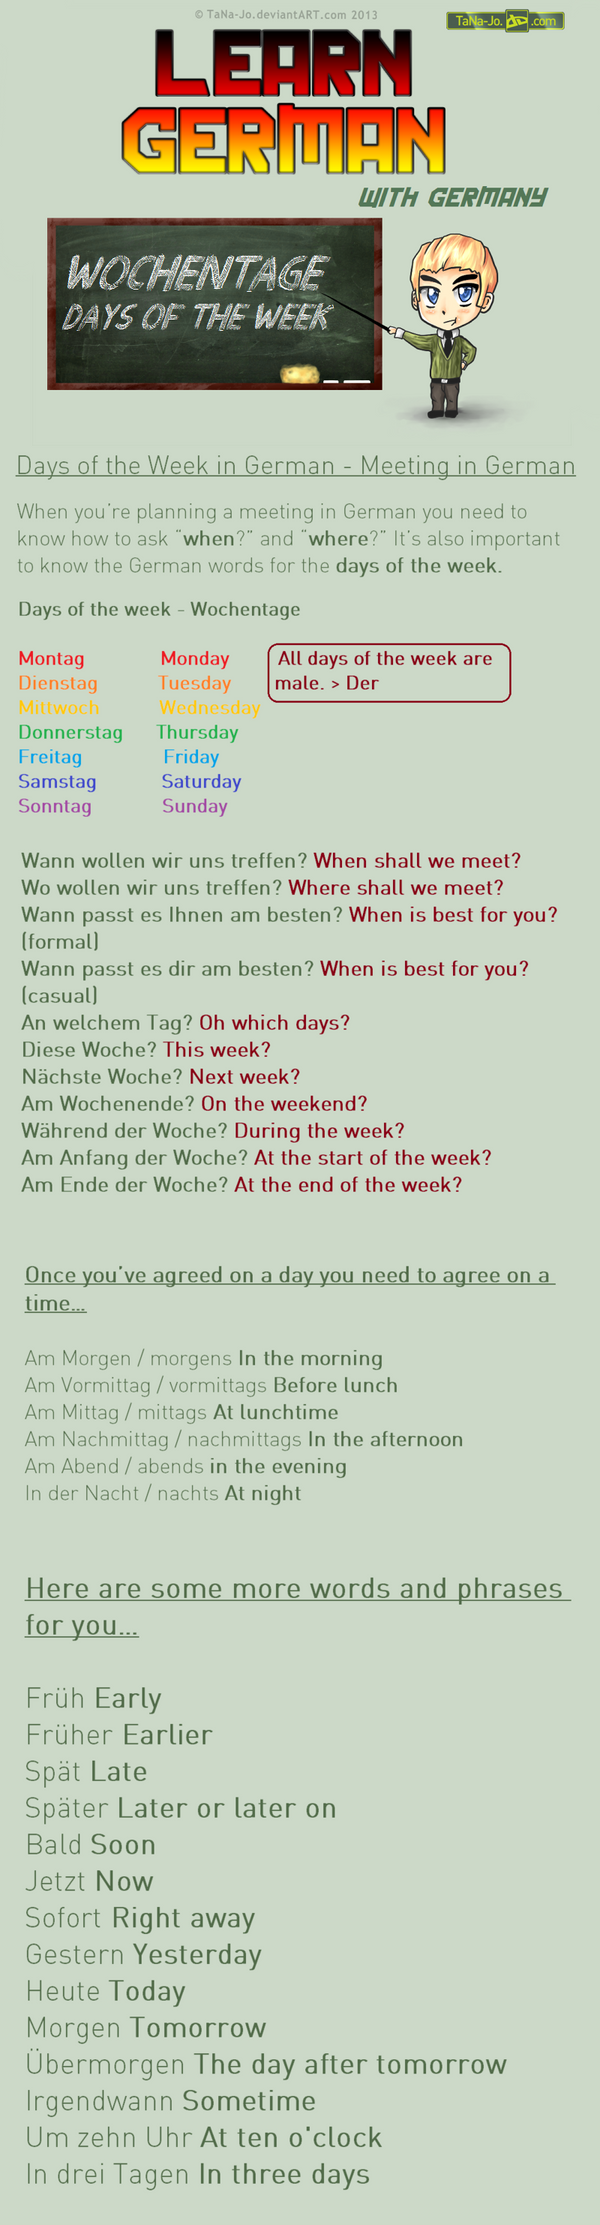 Learn German - Days of the week / Meeting by TaNa-Jo on deviantART